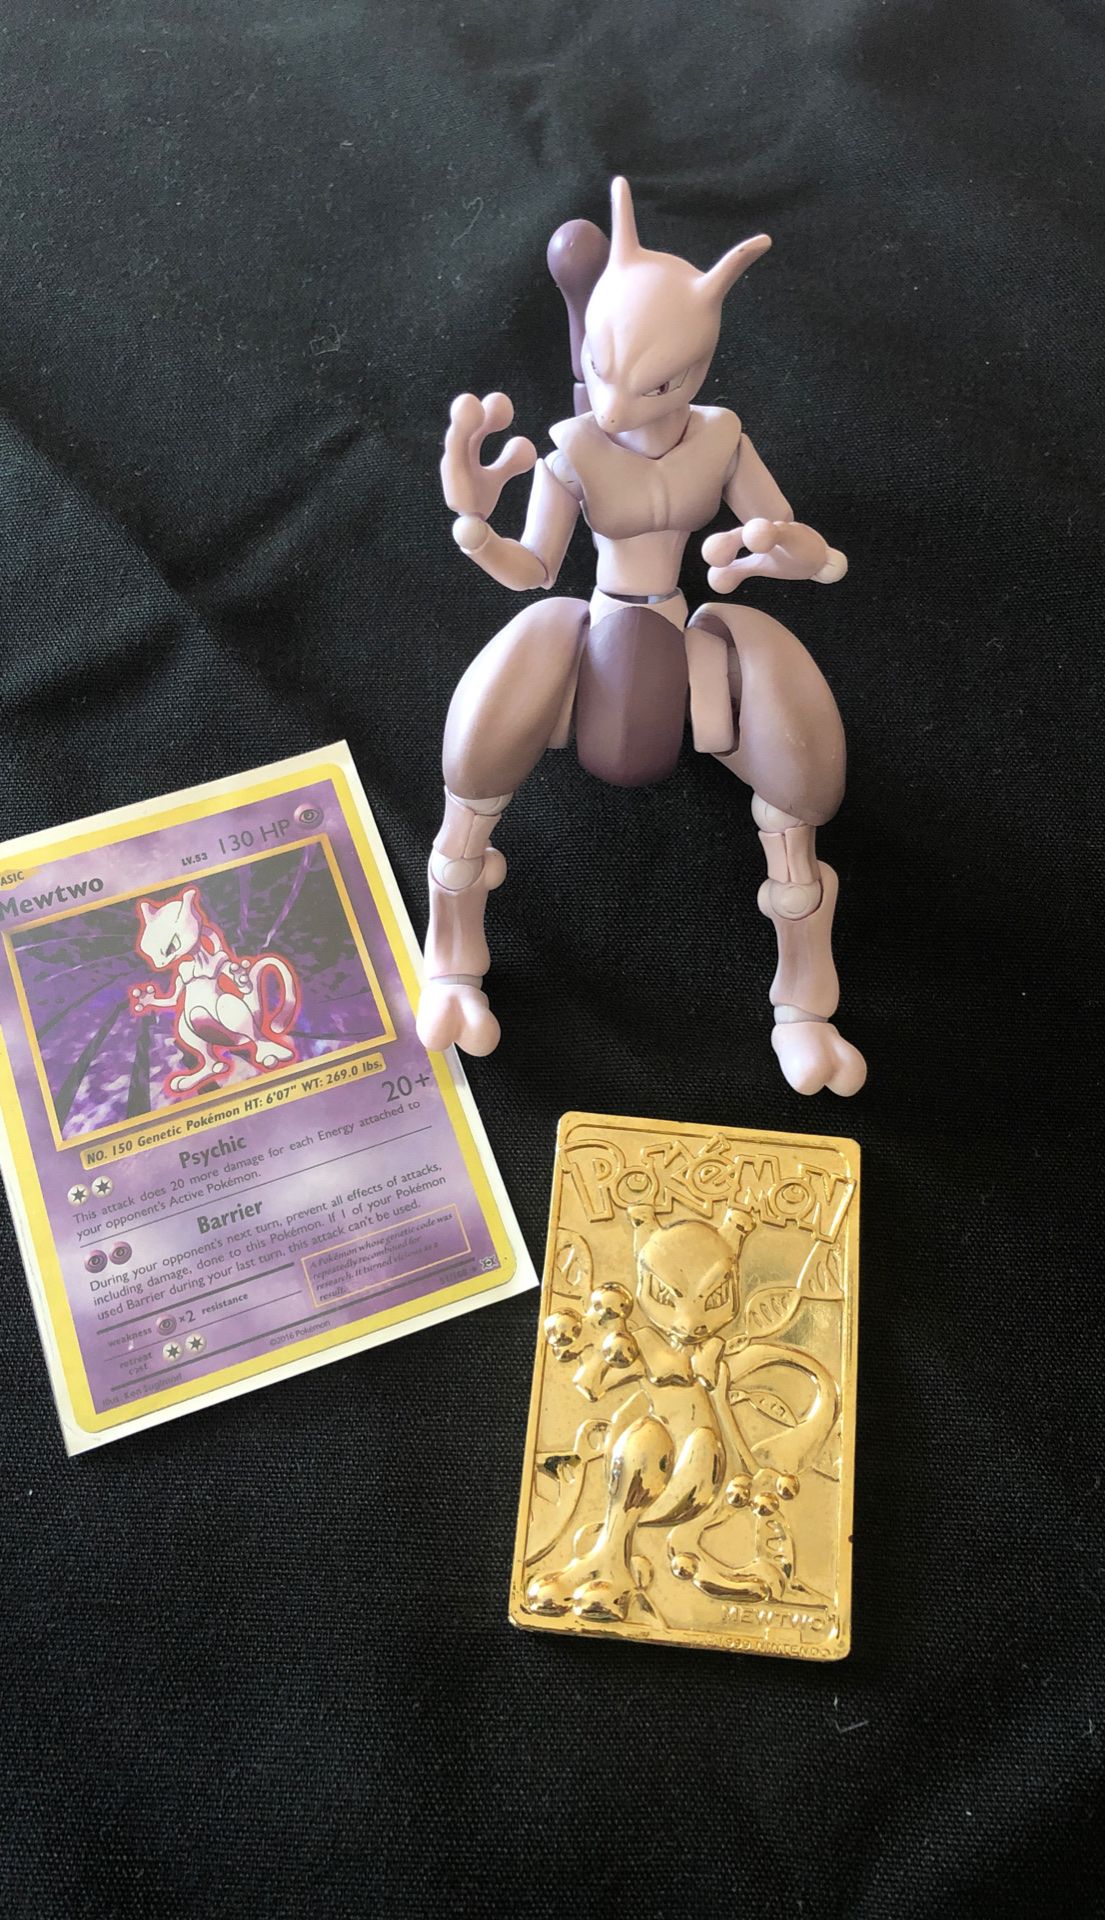 Mewtwo Pokémon figurine, card and gold card